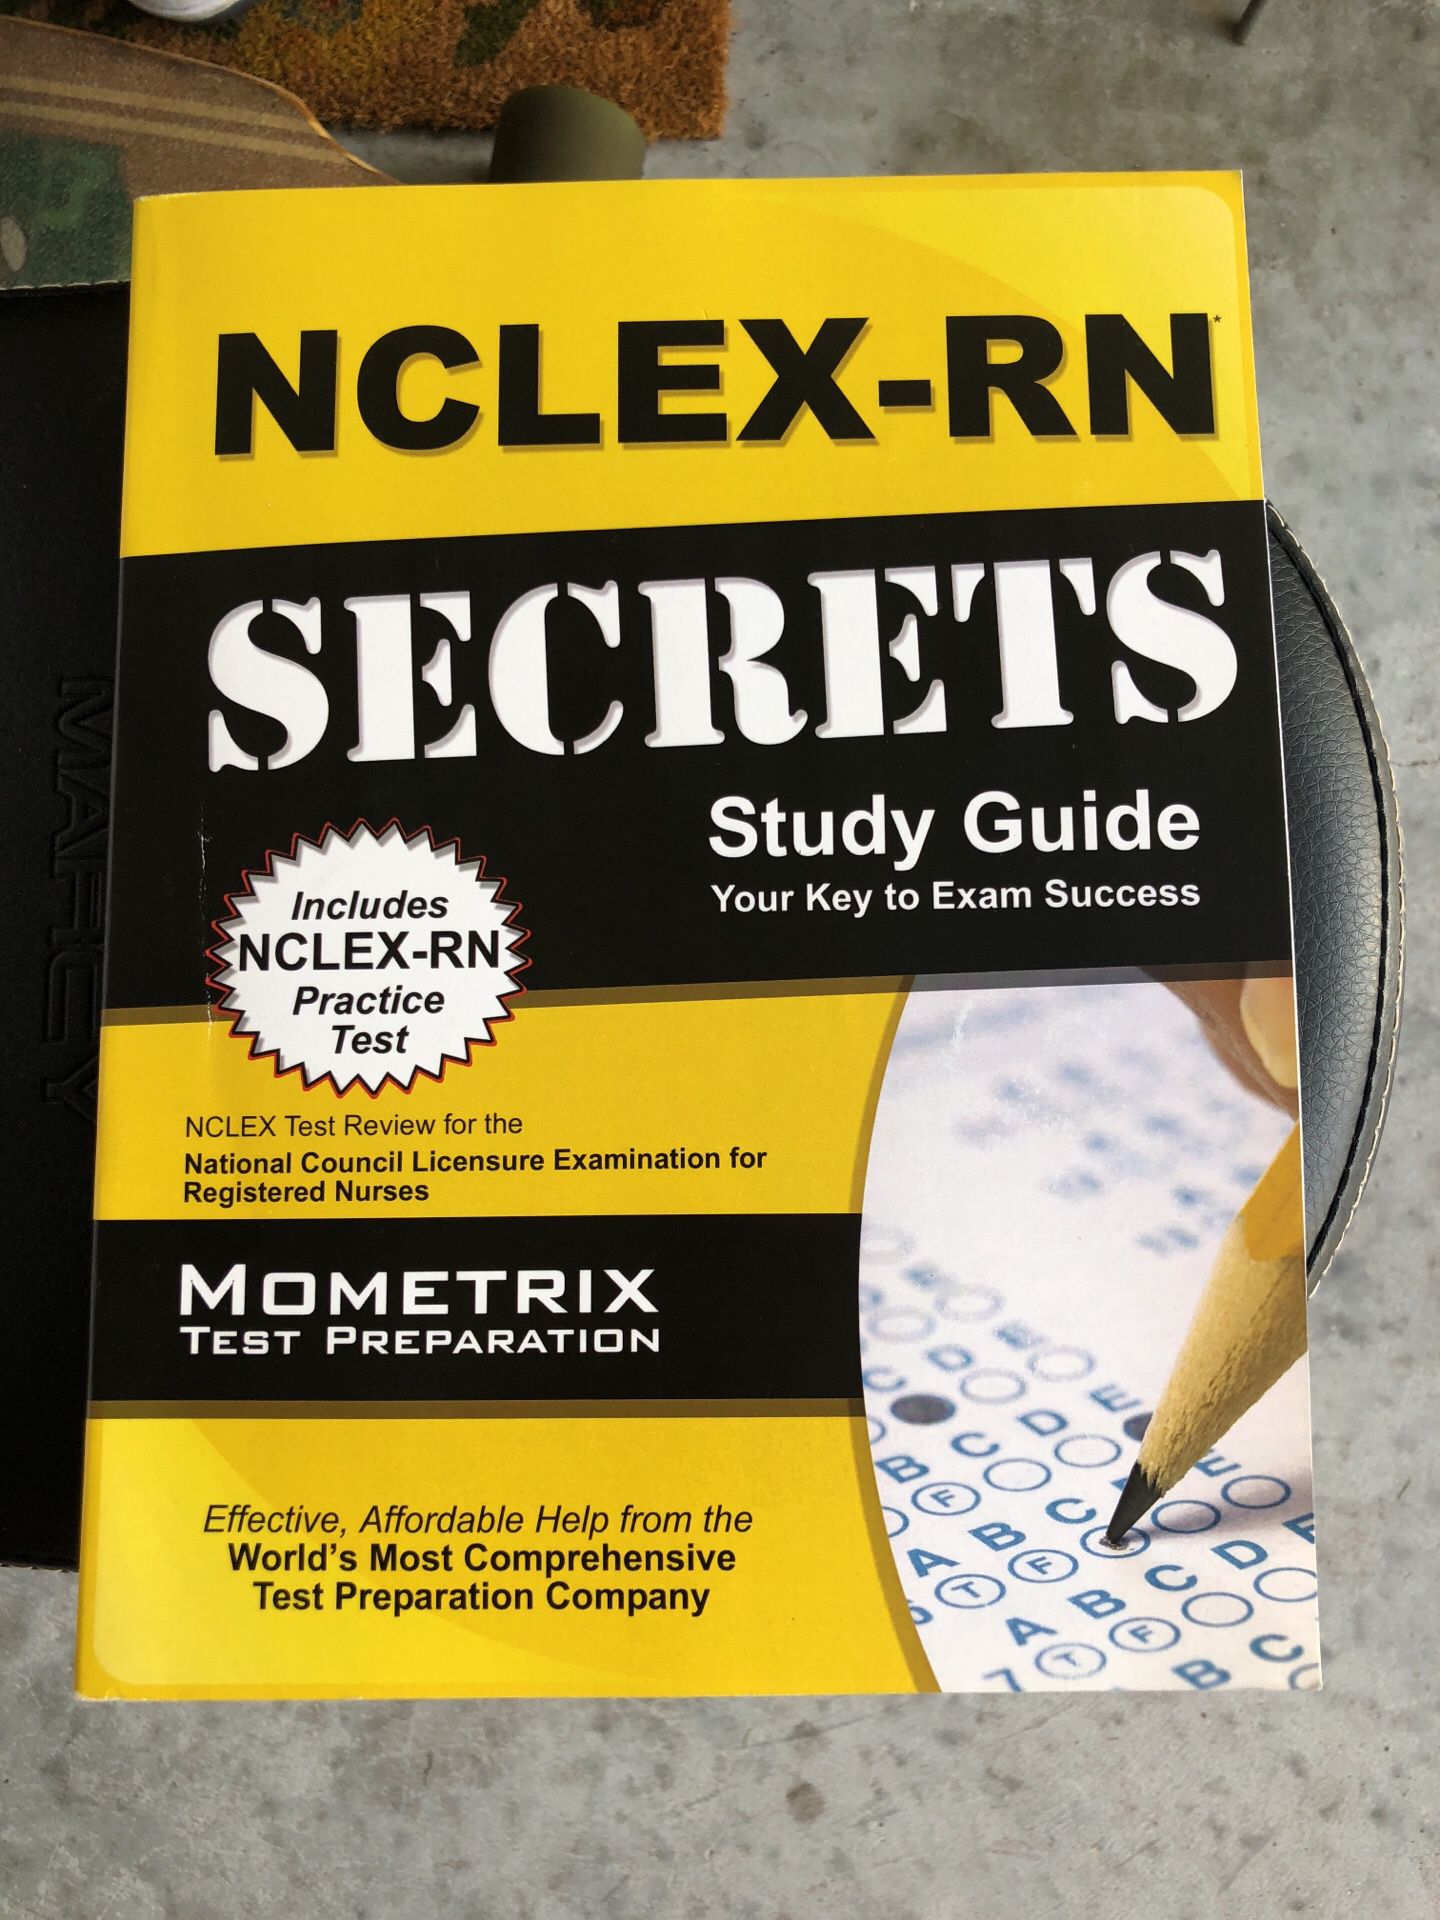 NCLEX study guide